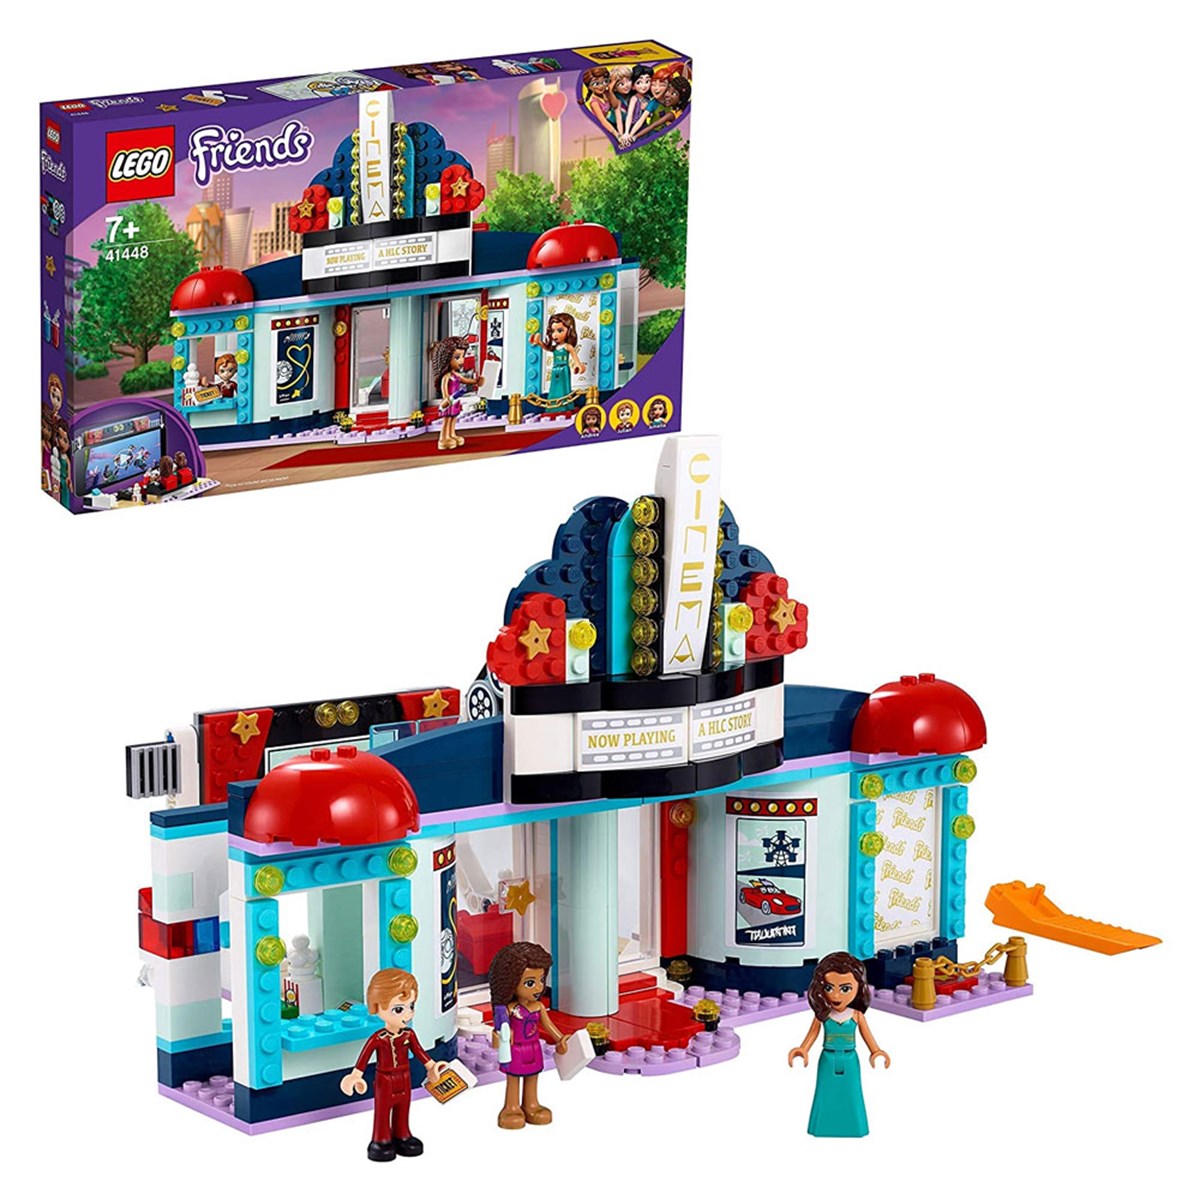 Lego Friends City Movie Theater 41448